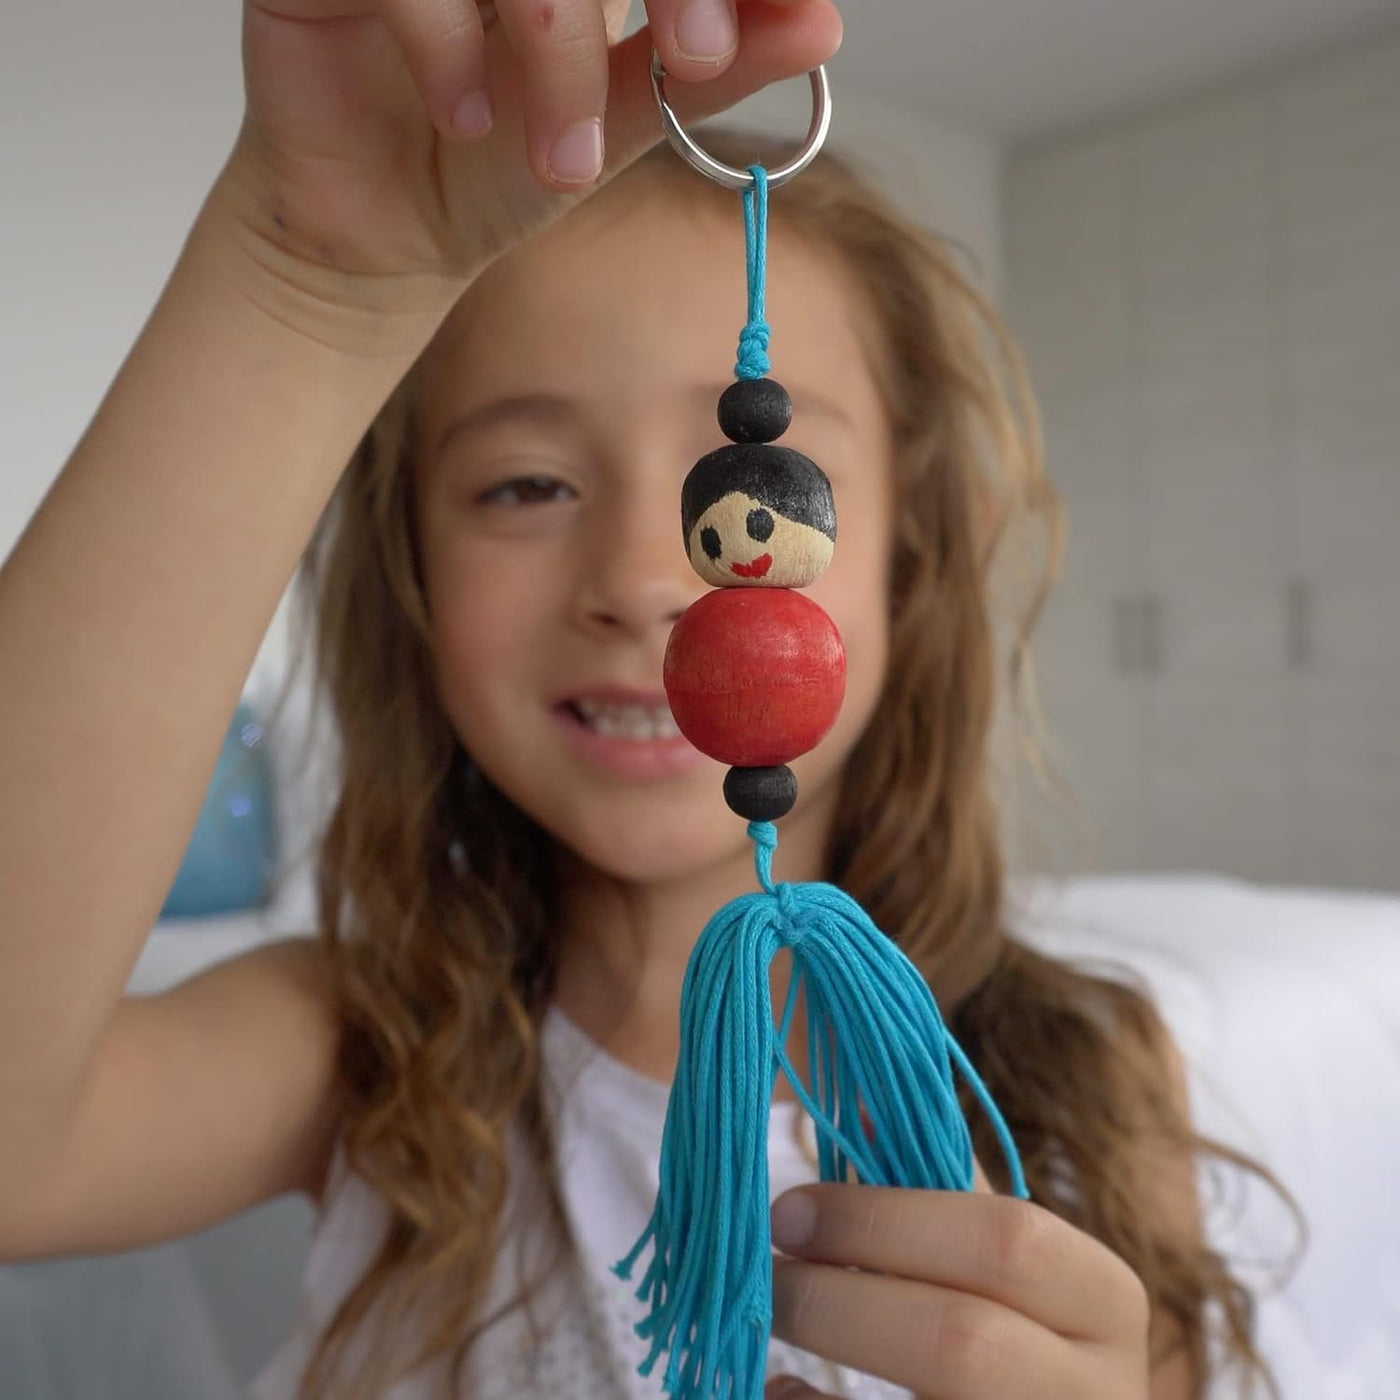 Chalk & Chuckles: Keychain Dolls- Craft Kits